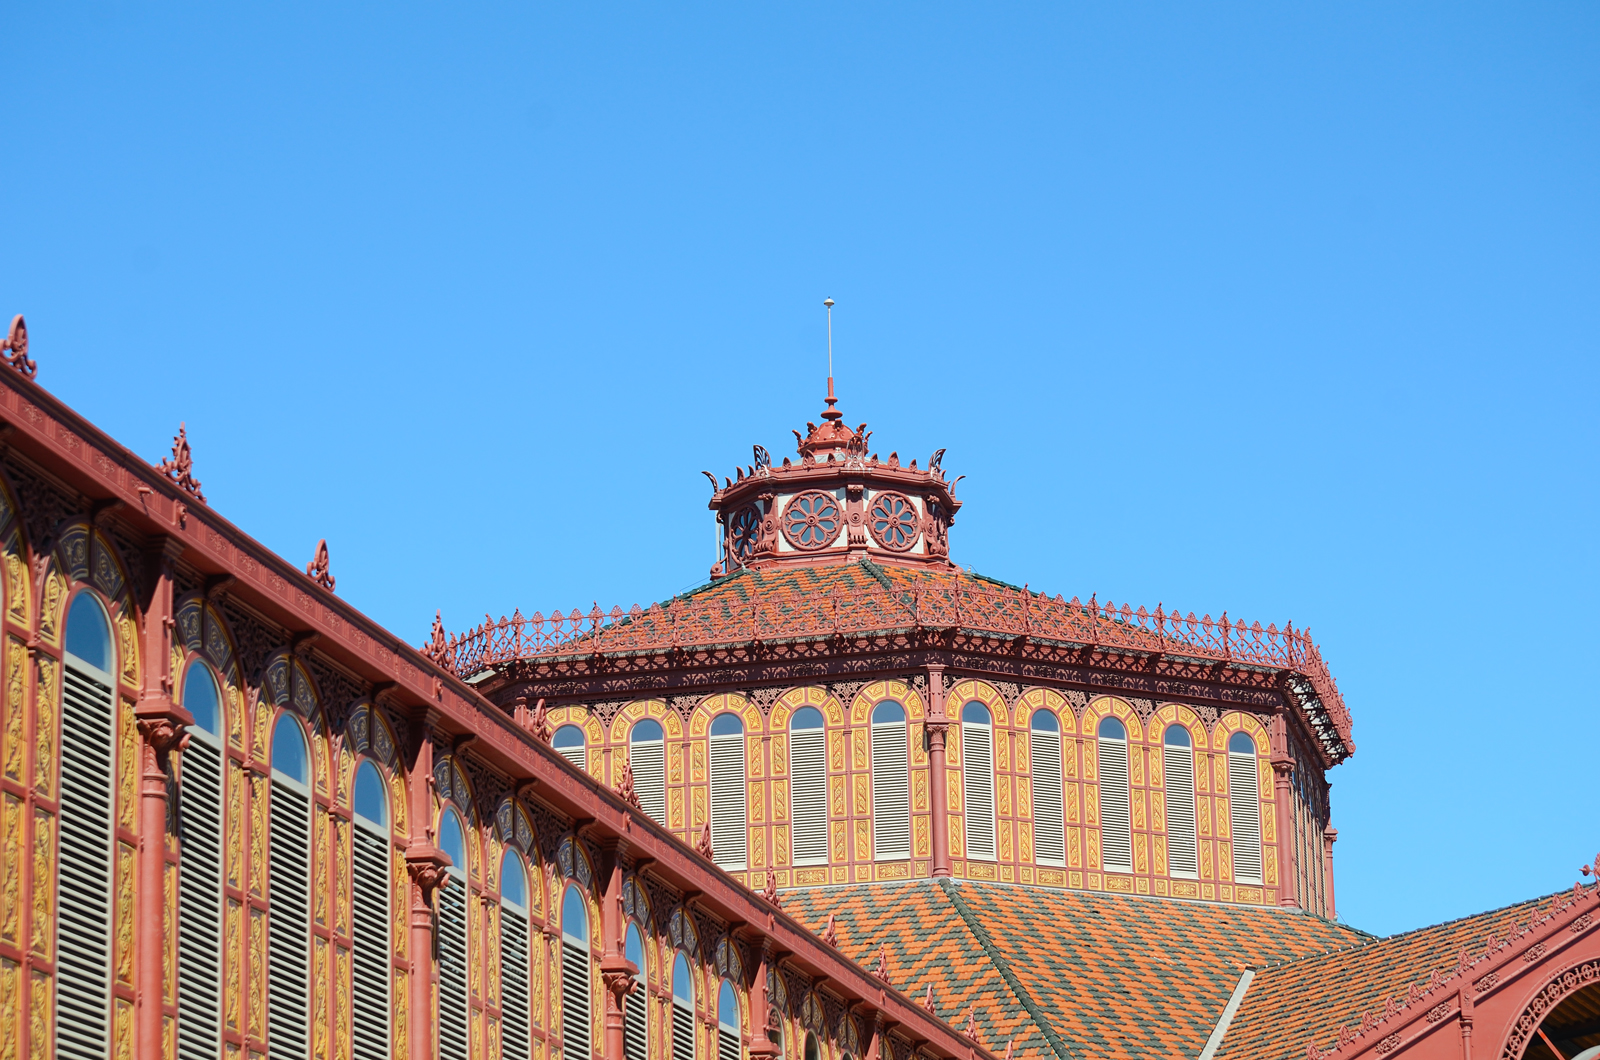 Barcelona Photoblog: Mercat of Sant Antoni: Restored Market to Open in 2018